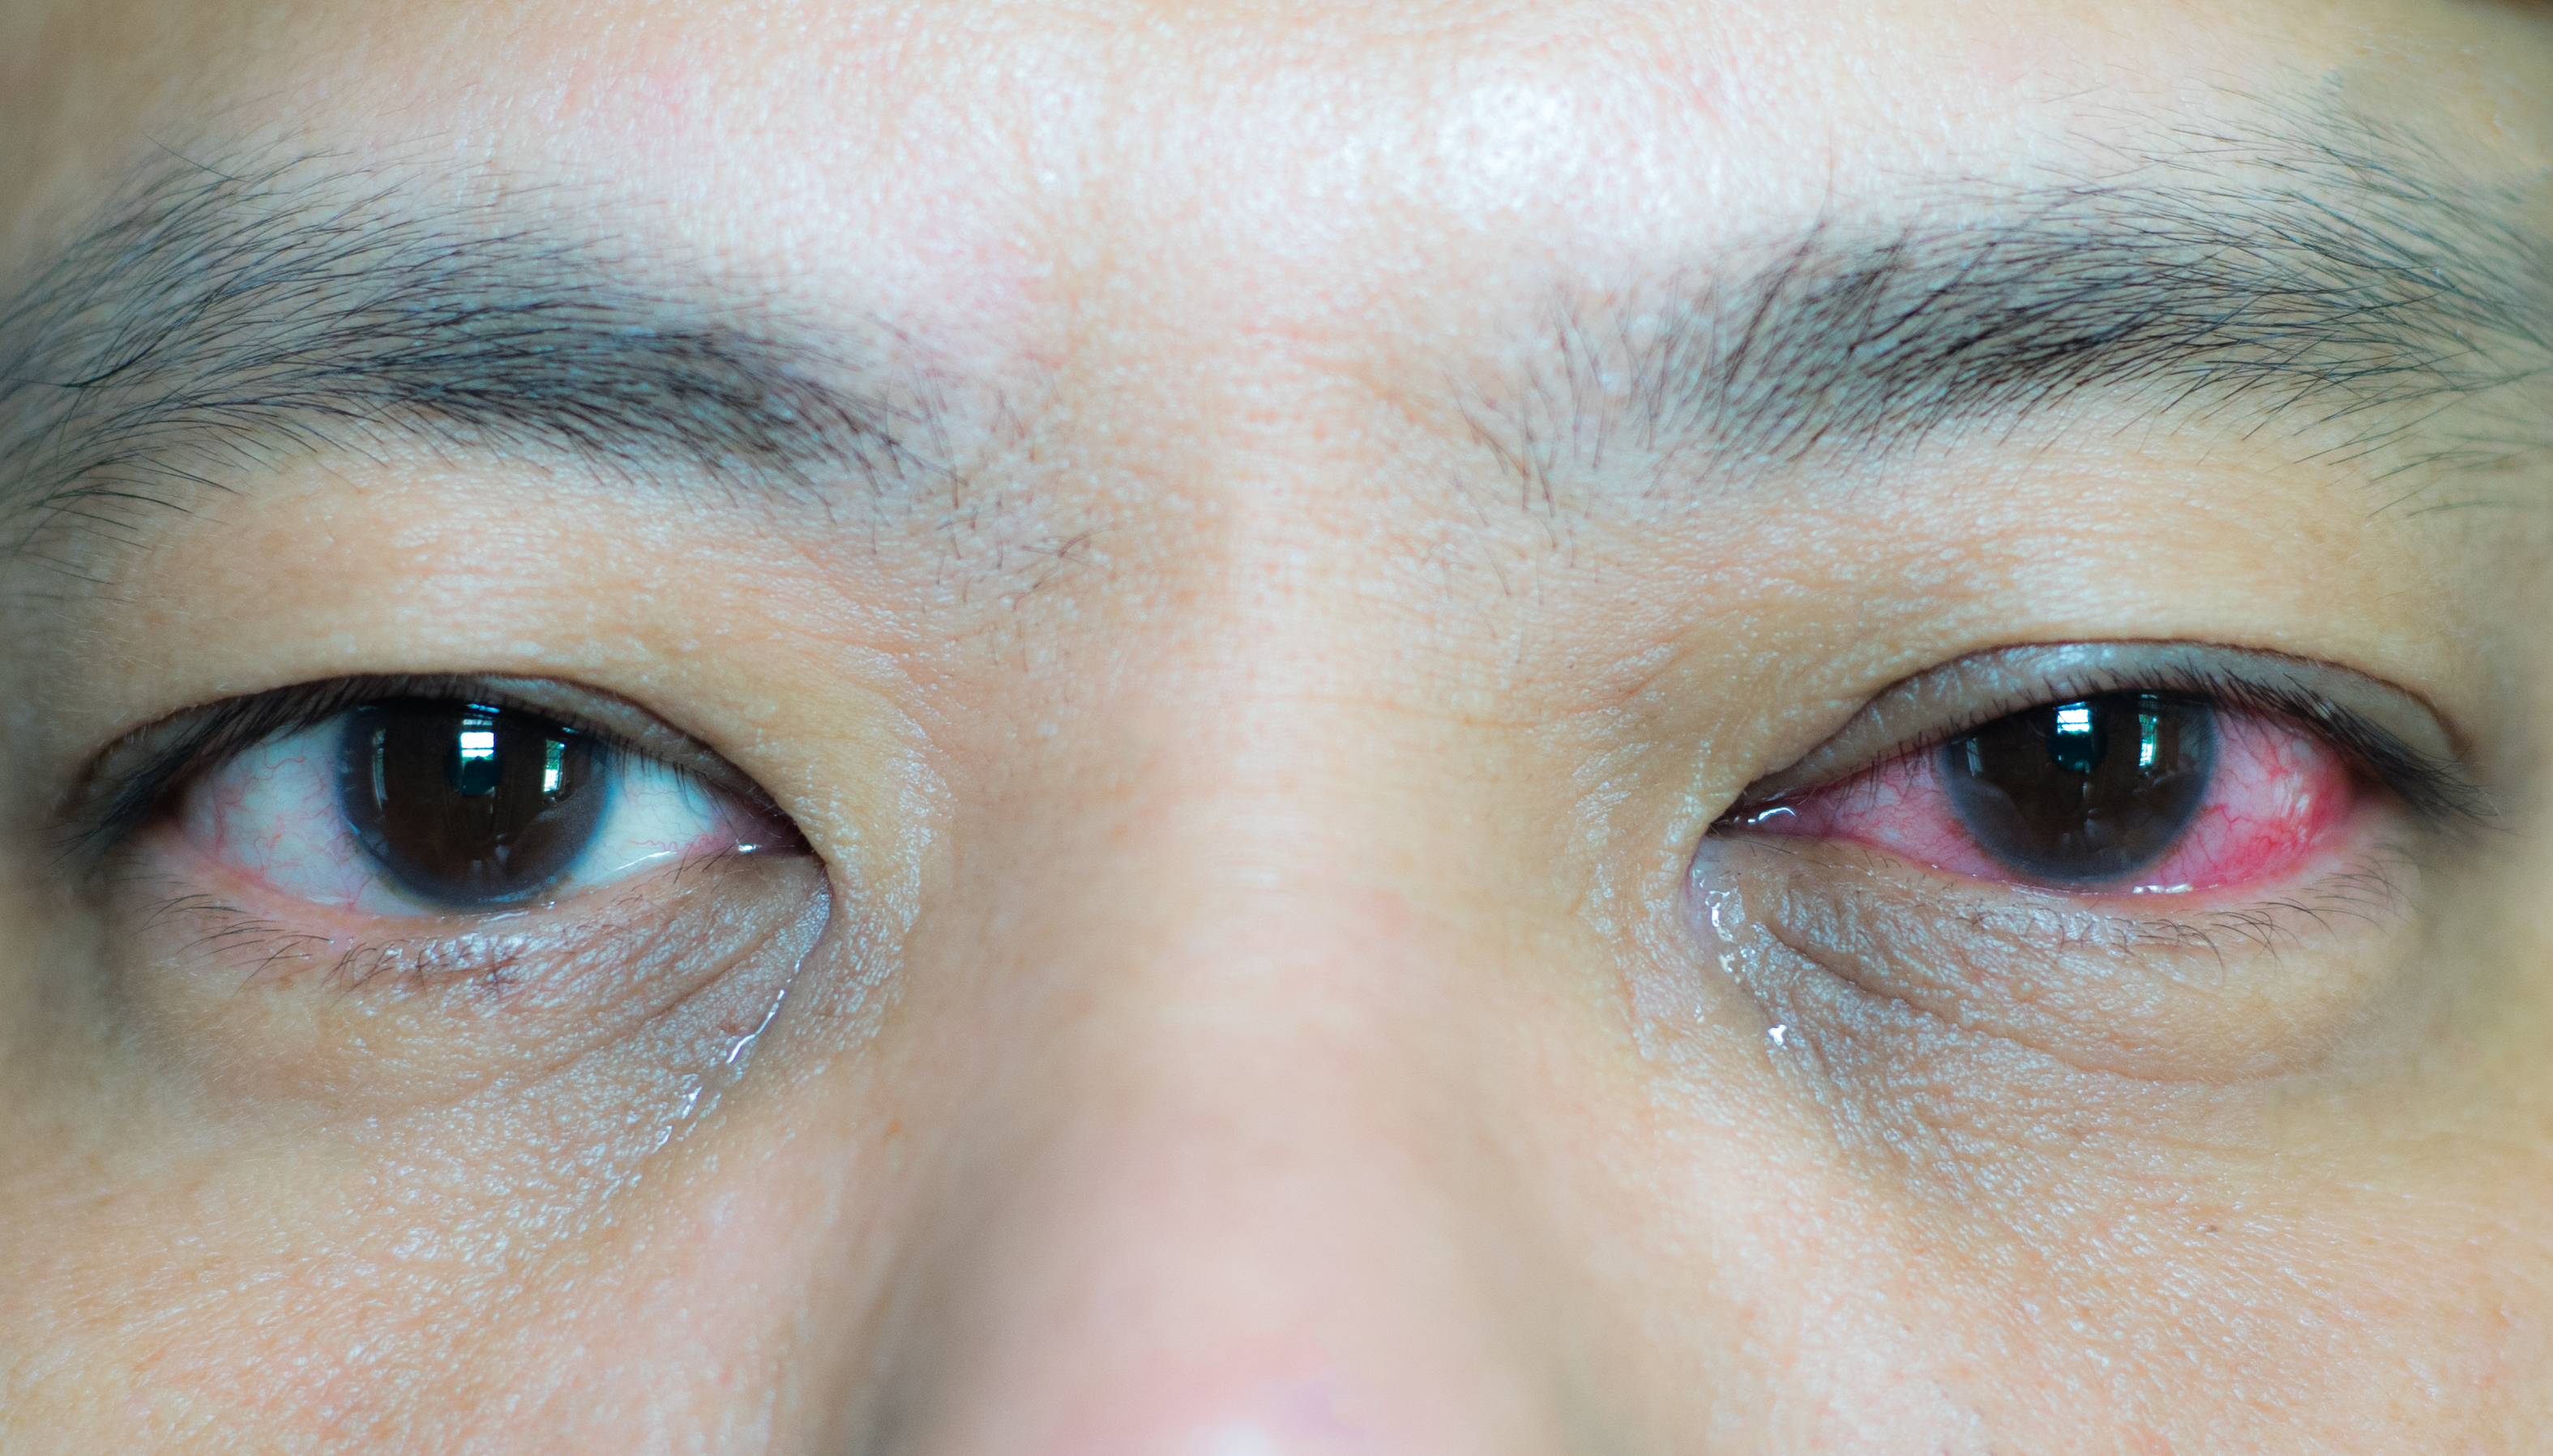 Conjunctivitis- Pink eye